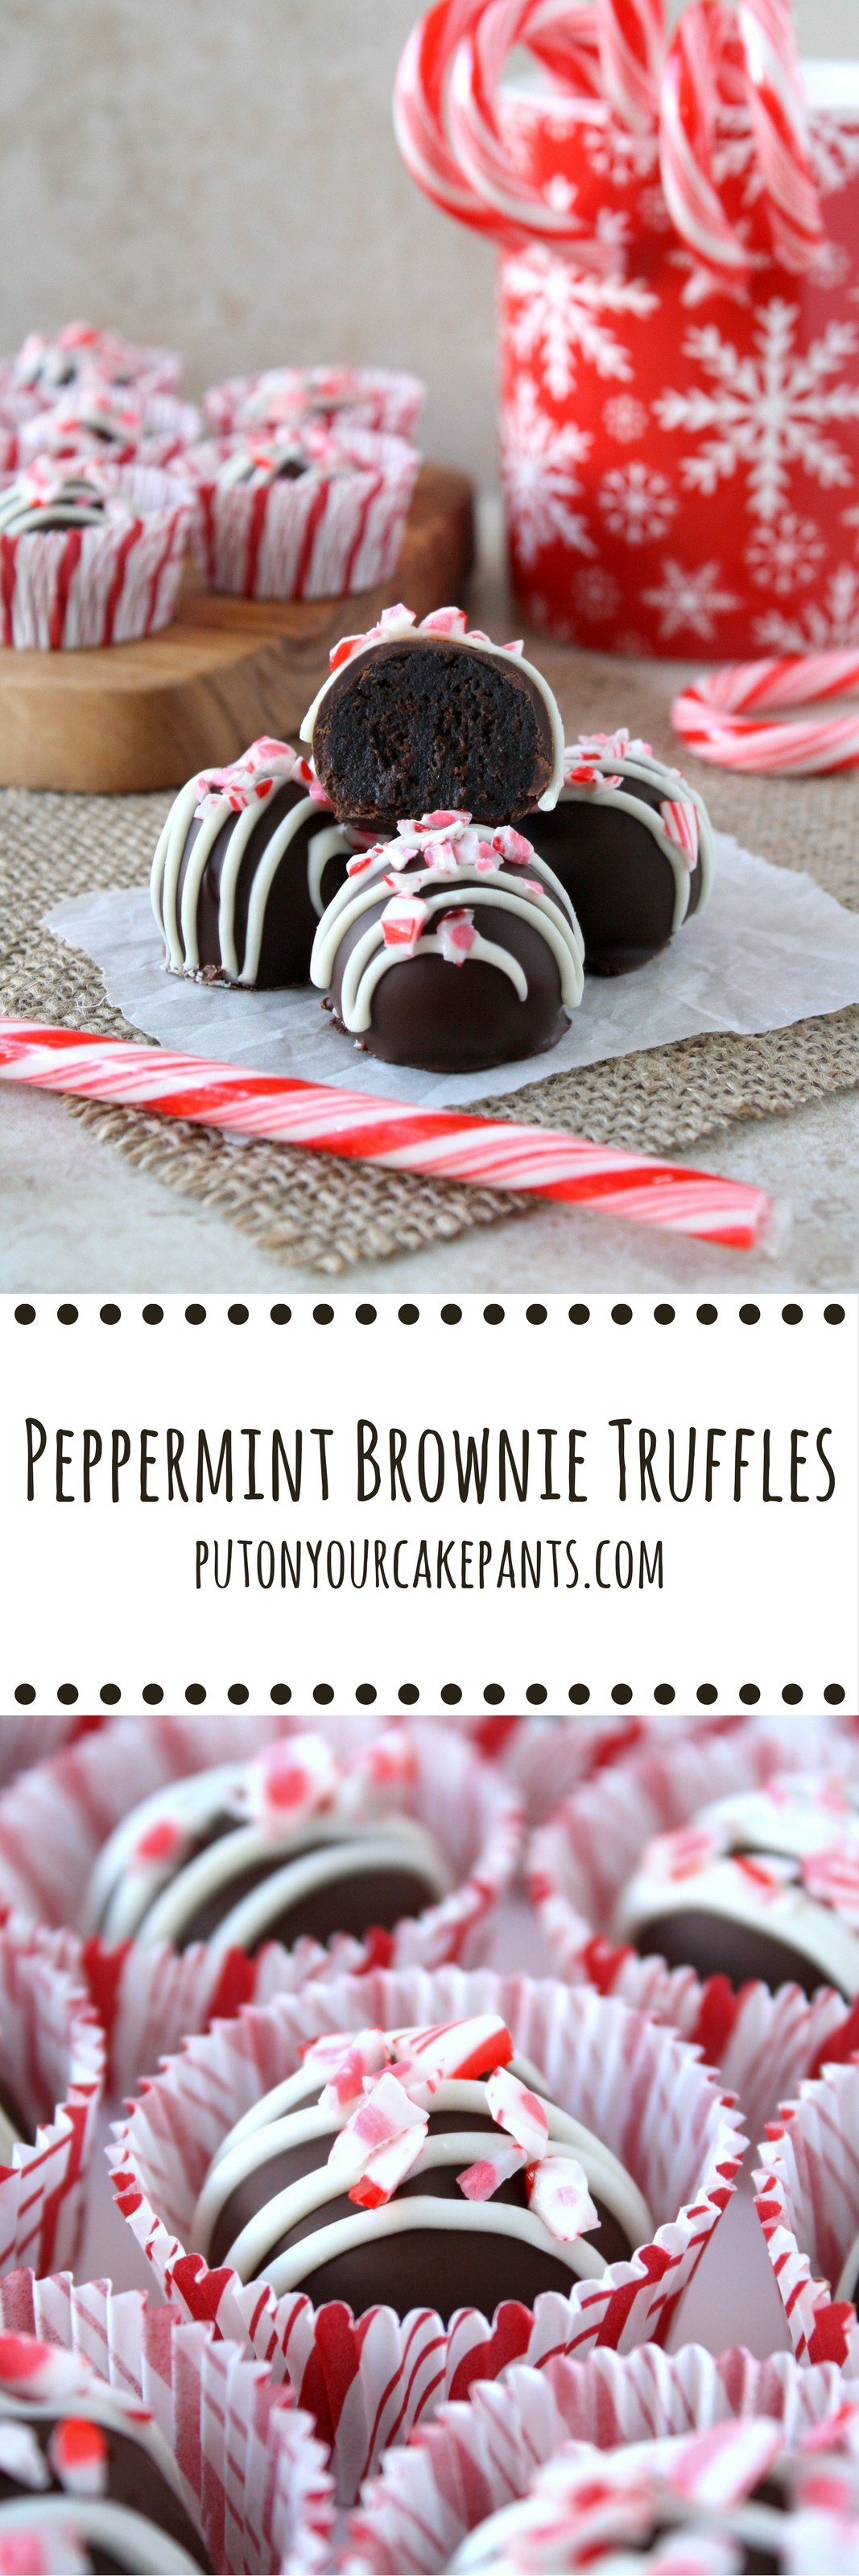 peppermint brownie truffles